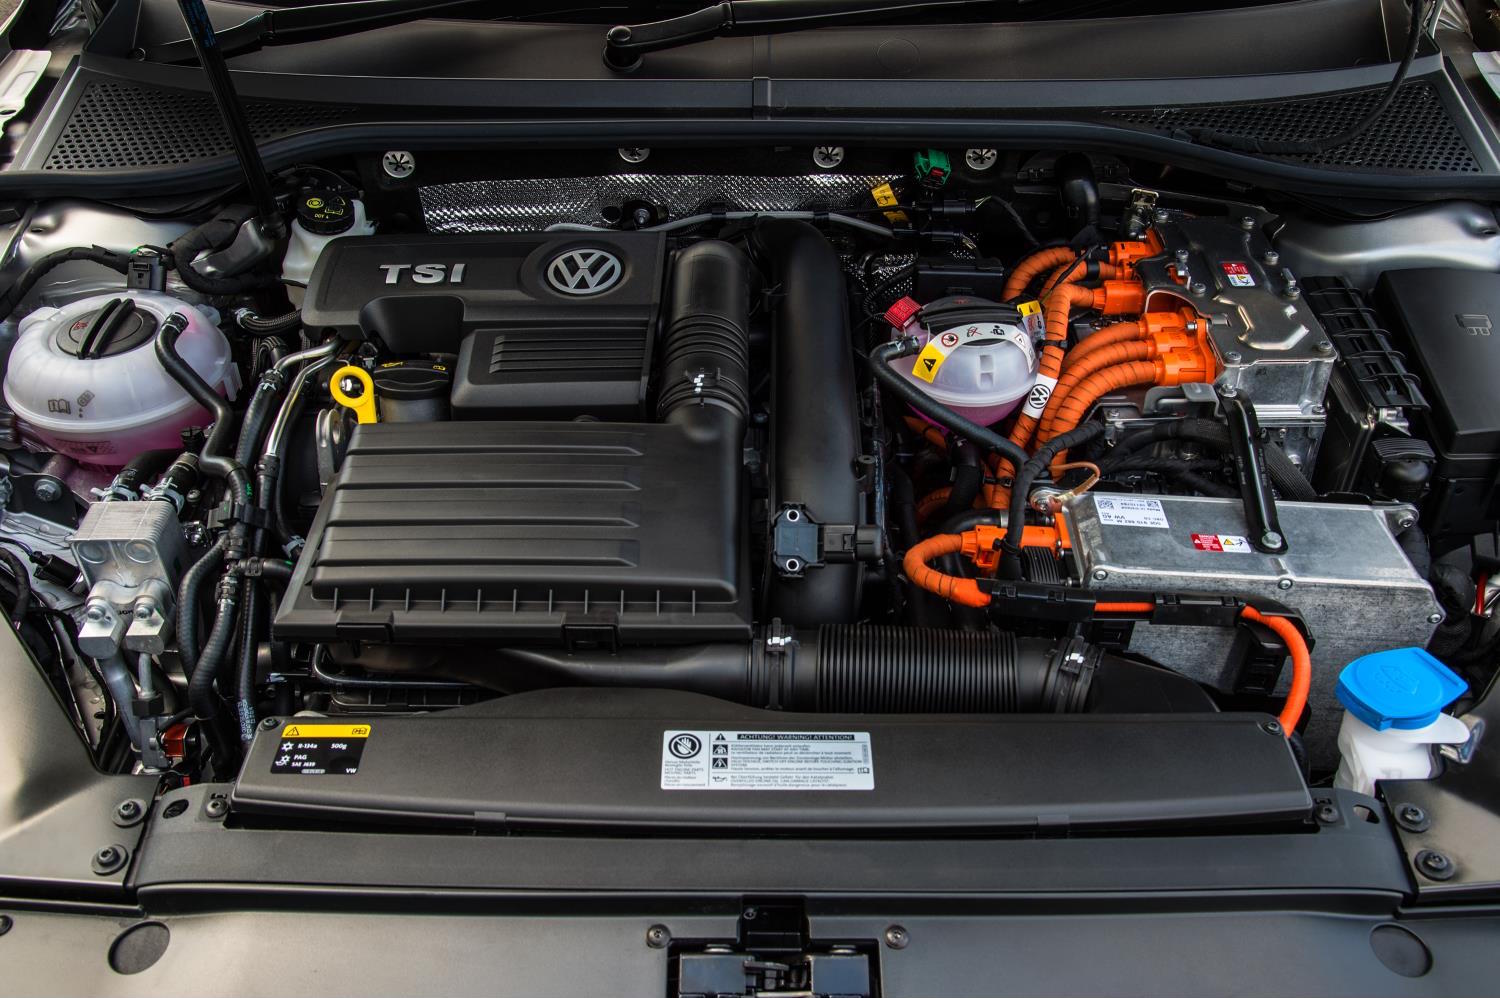 Volkswagen Passat GTE plug-in hybrid goes on sale in the UK - ForceGT.com